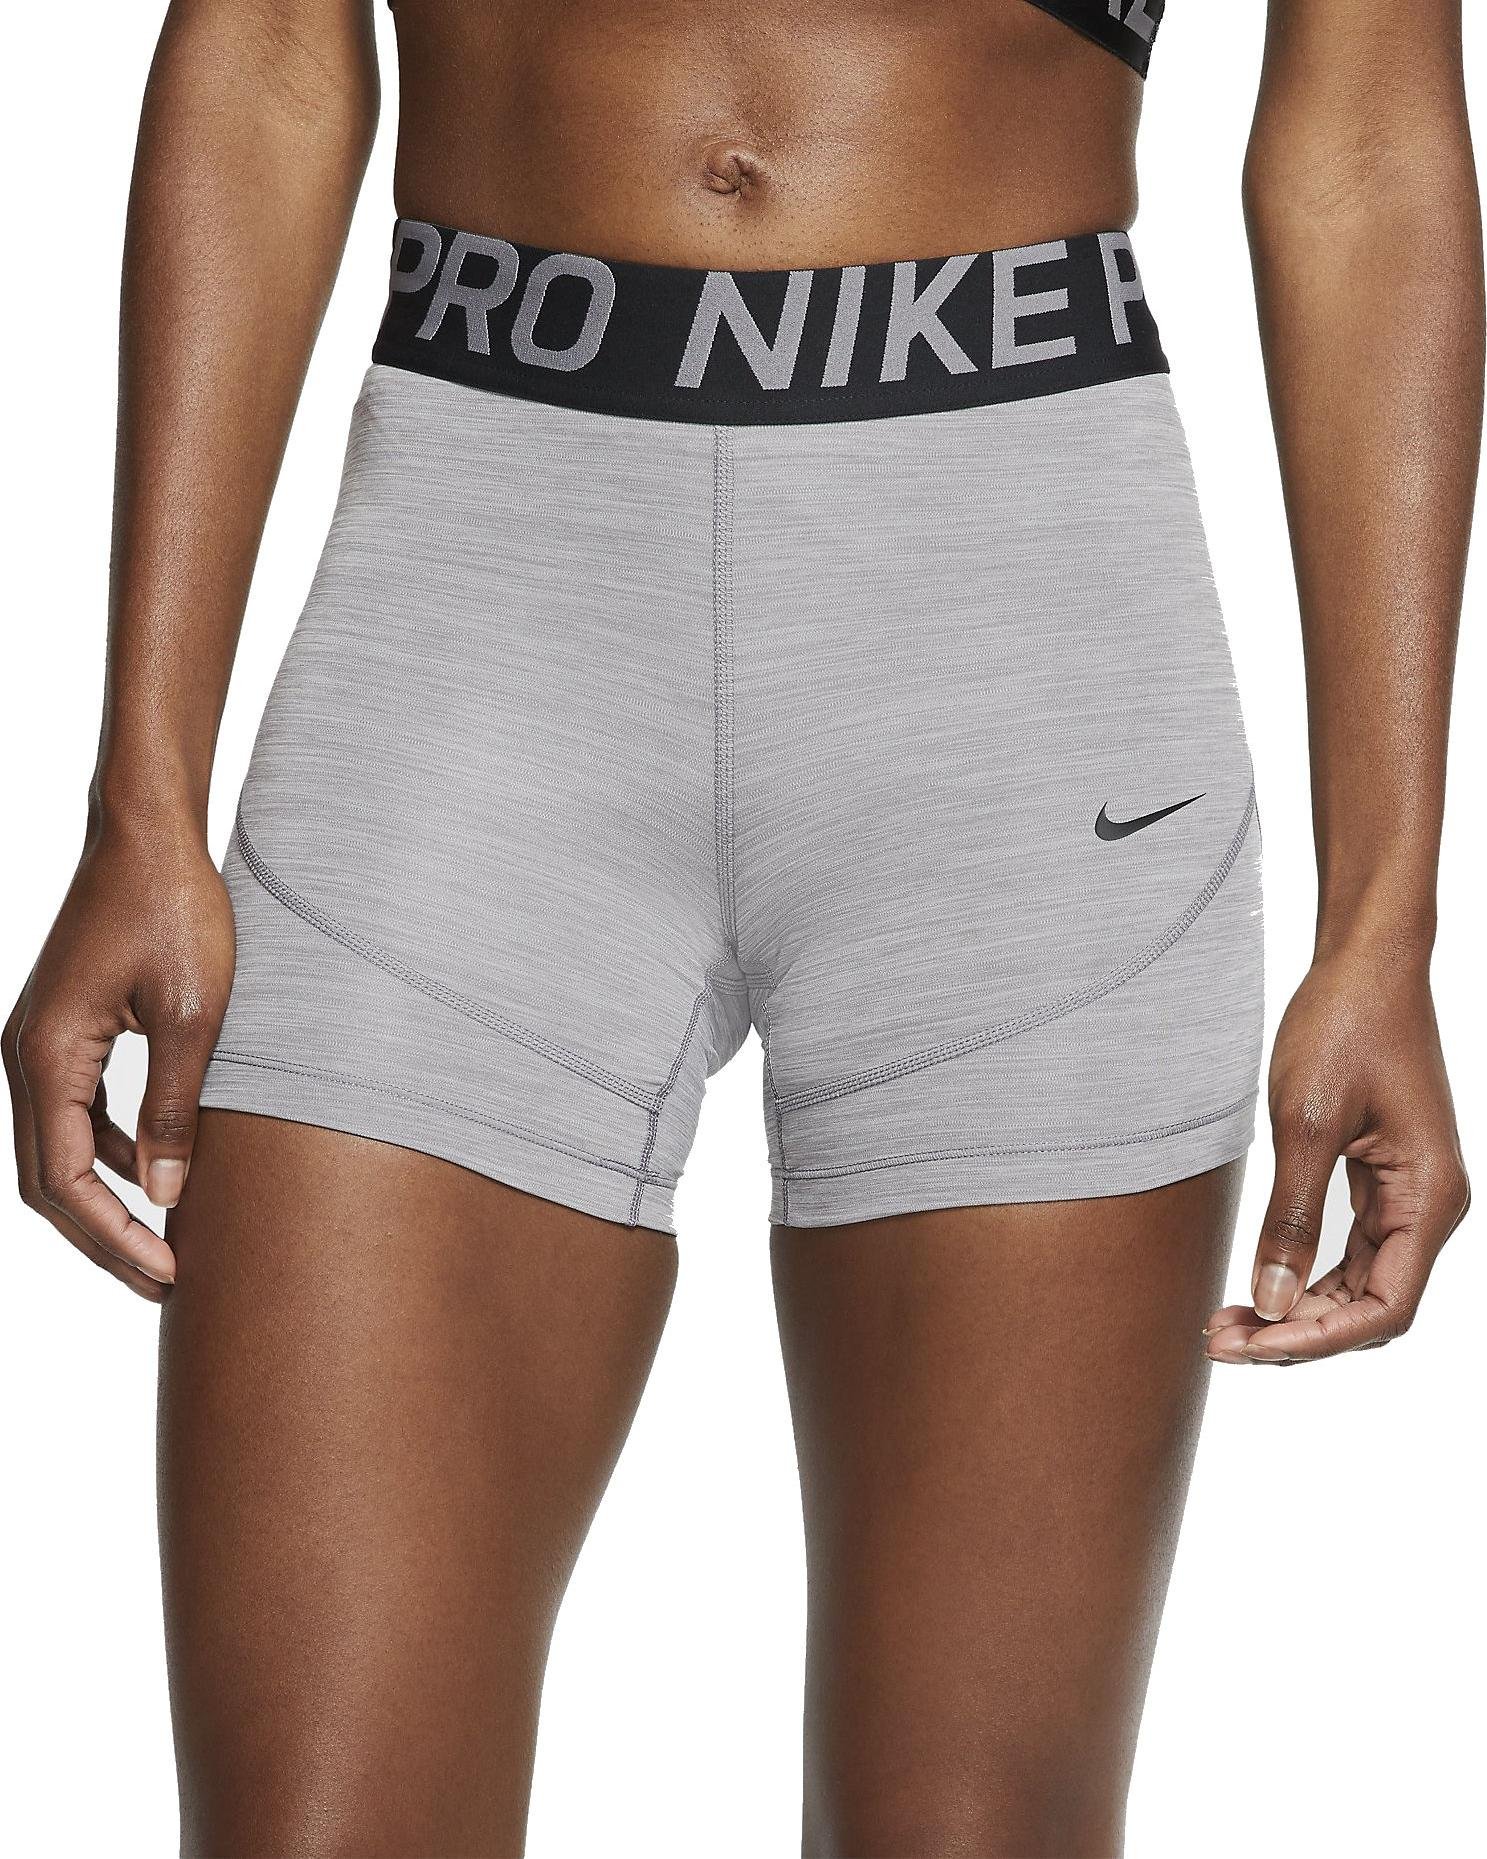 Shorts Nike W NP SHRT 5